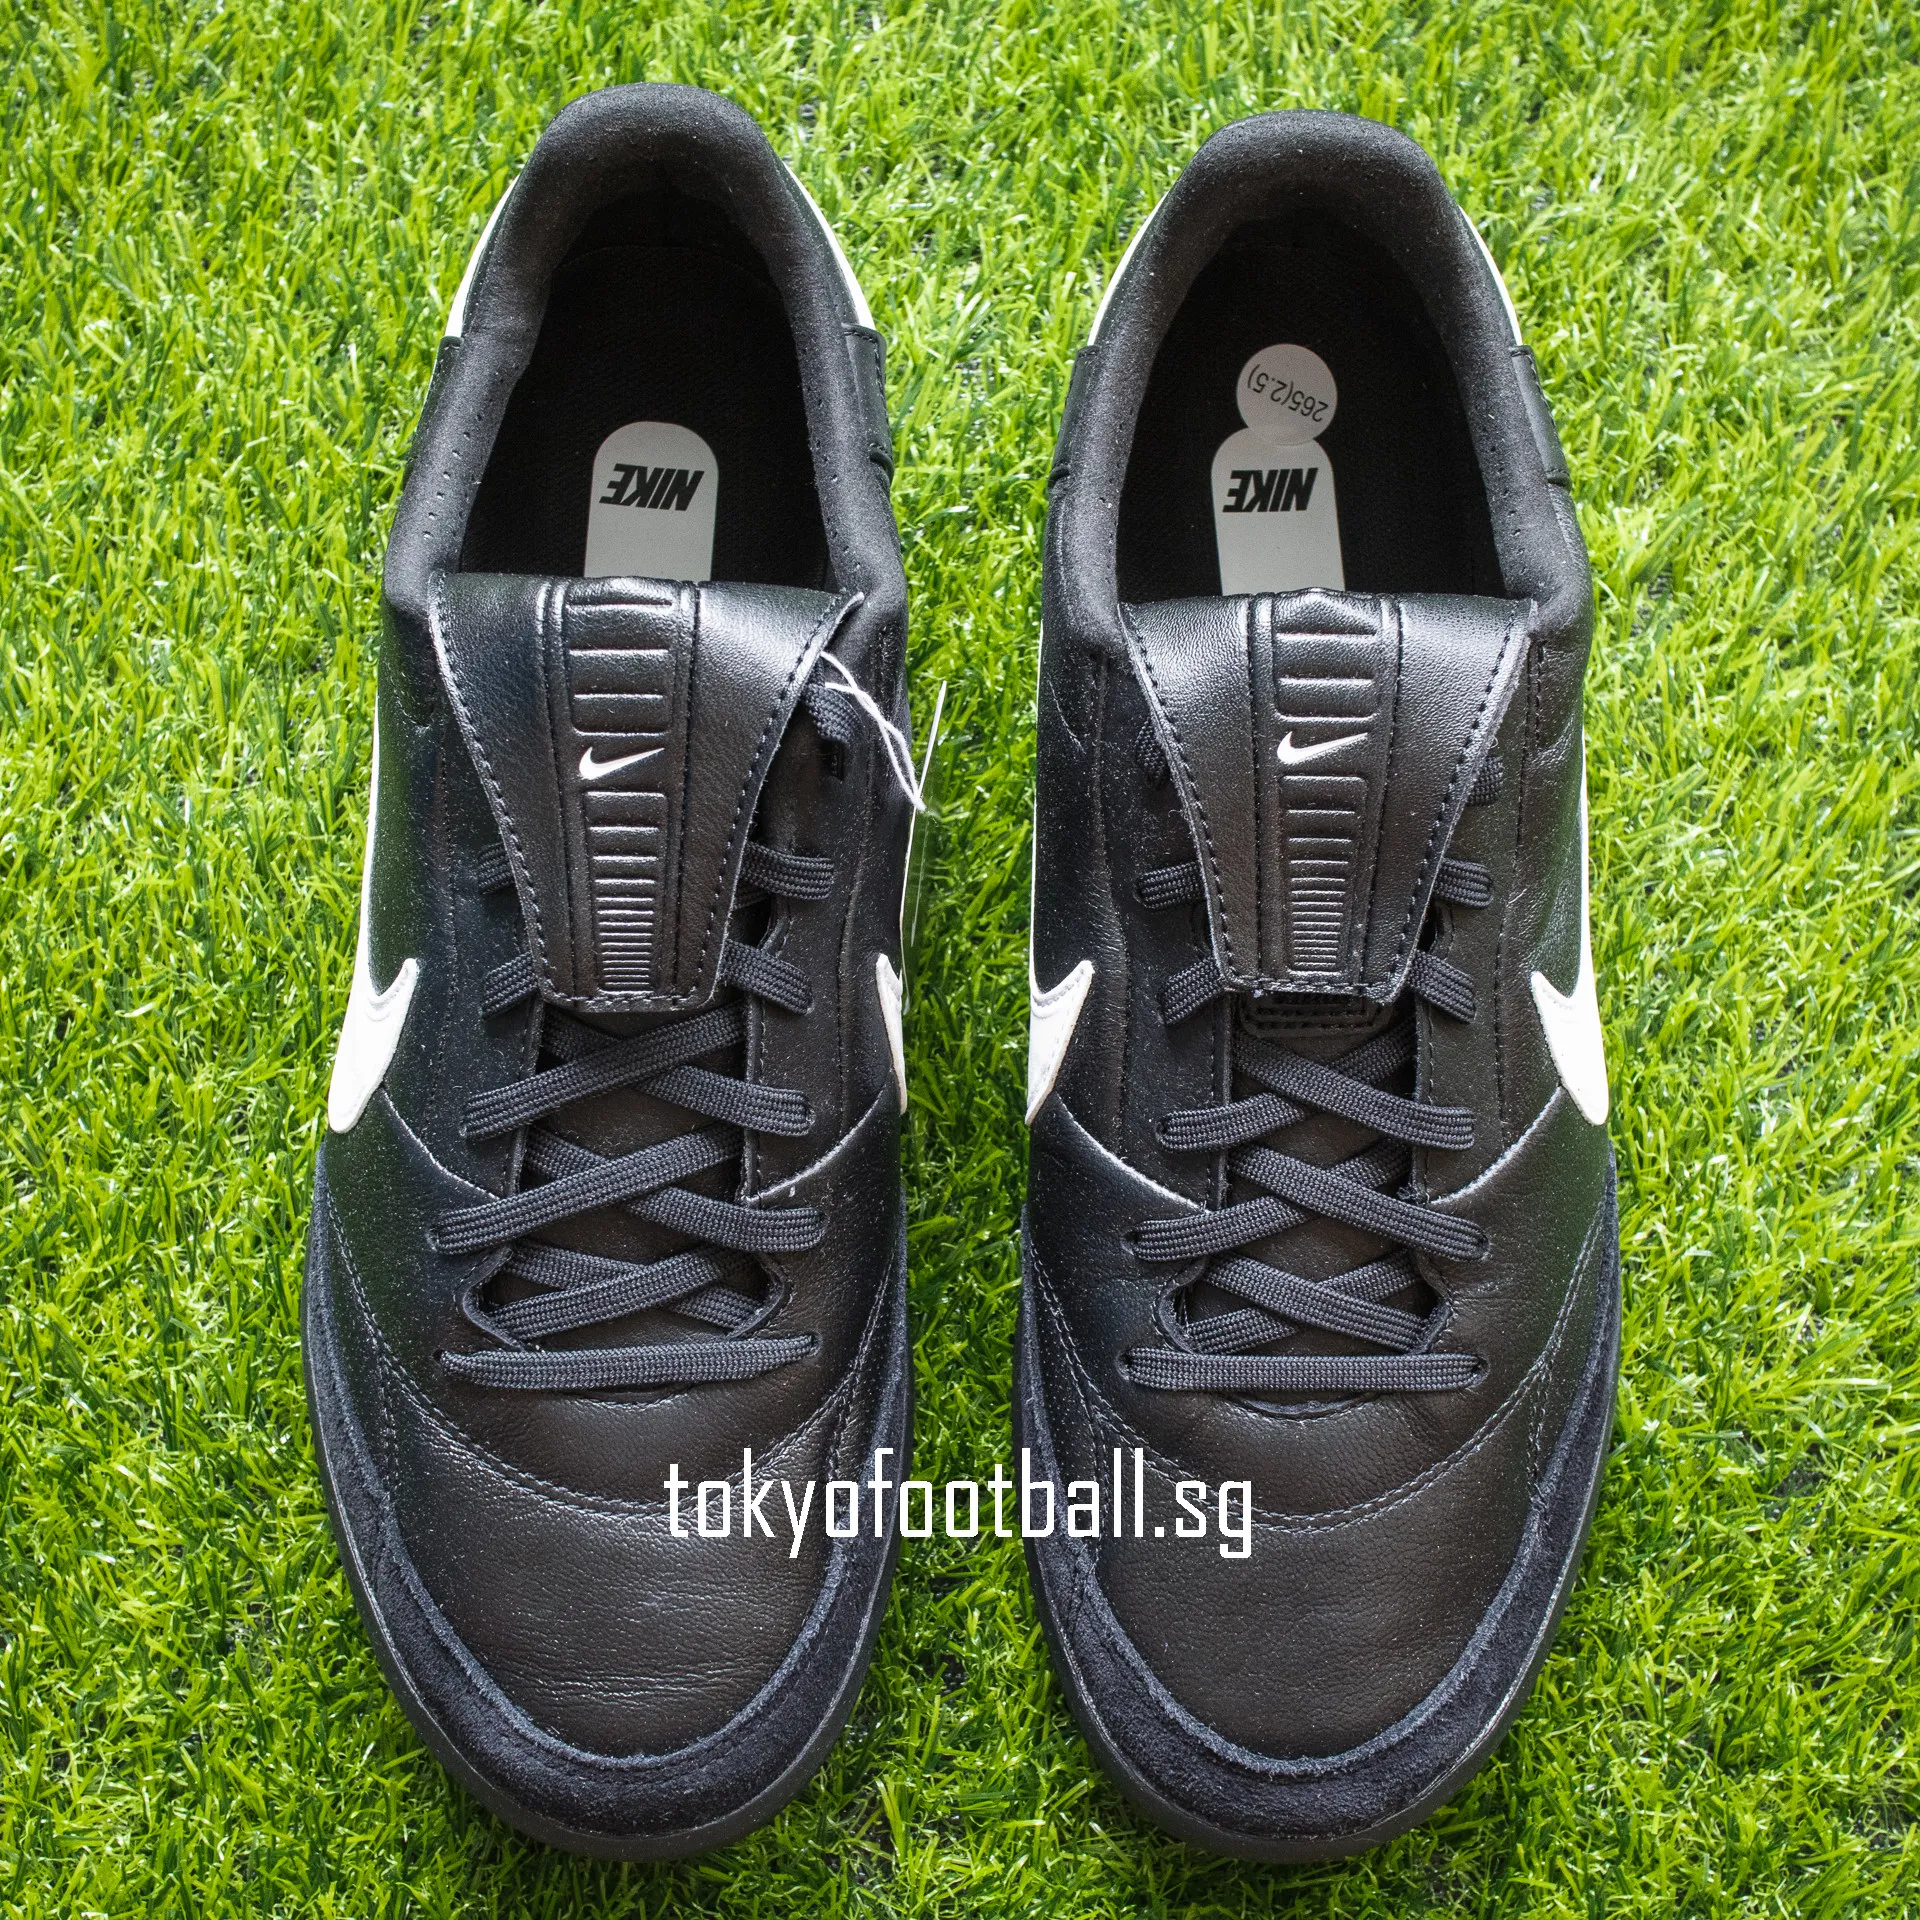 SG Local Seller] NIKE TIEMPO PREMIER 3 TF soccer futsal turf football boots | Lazada Singapore